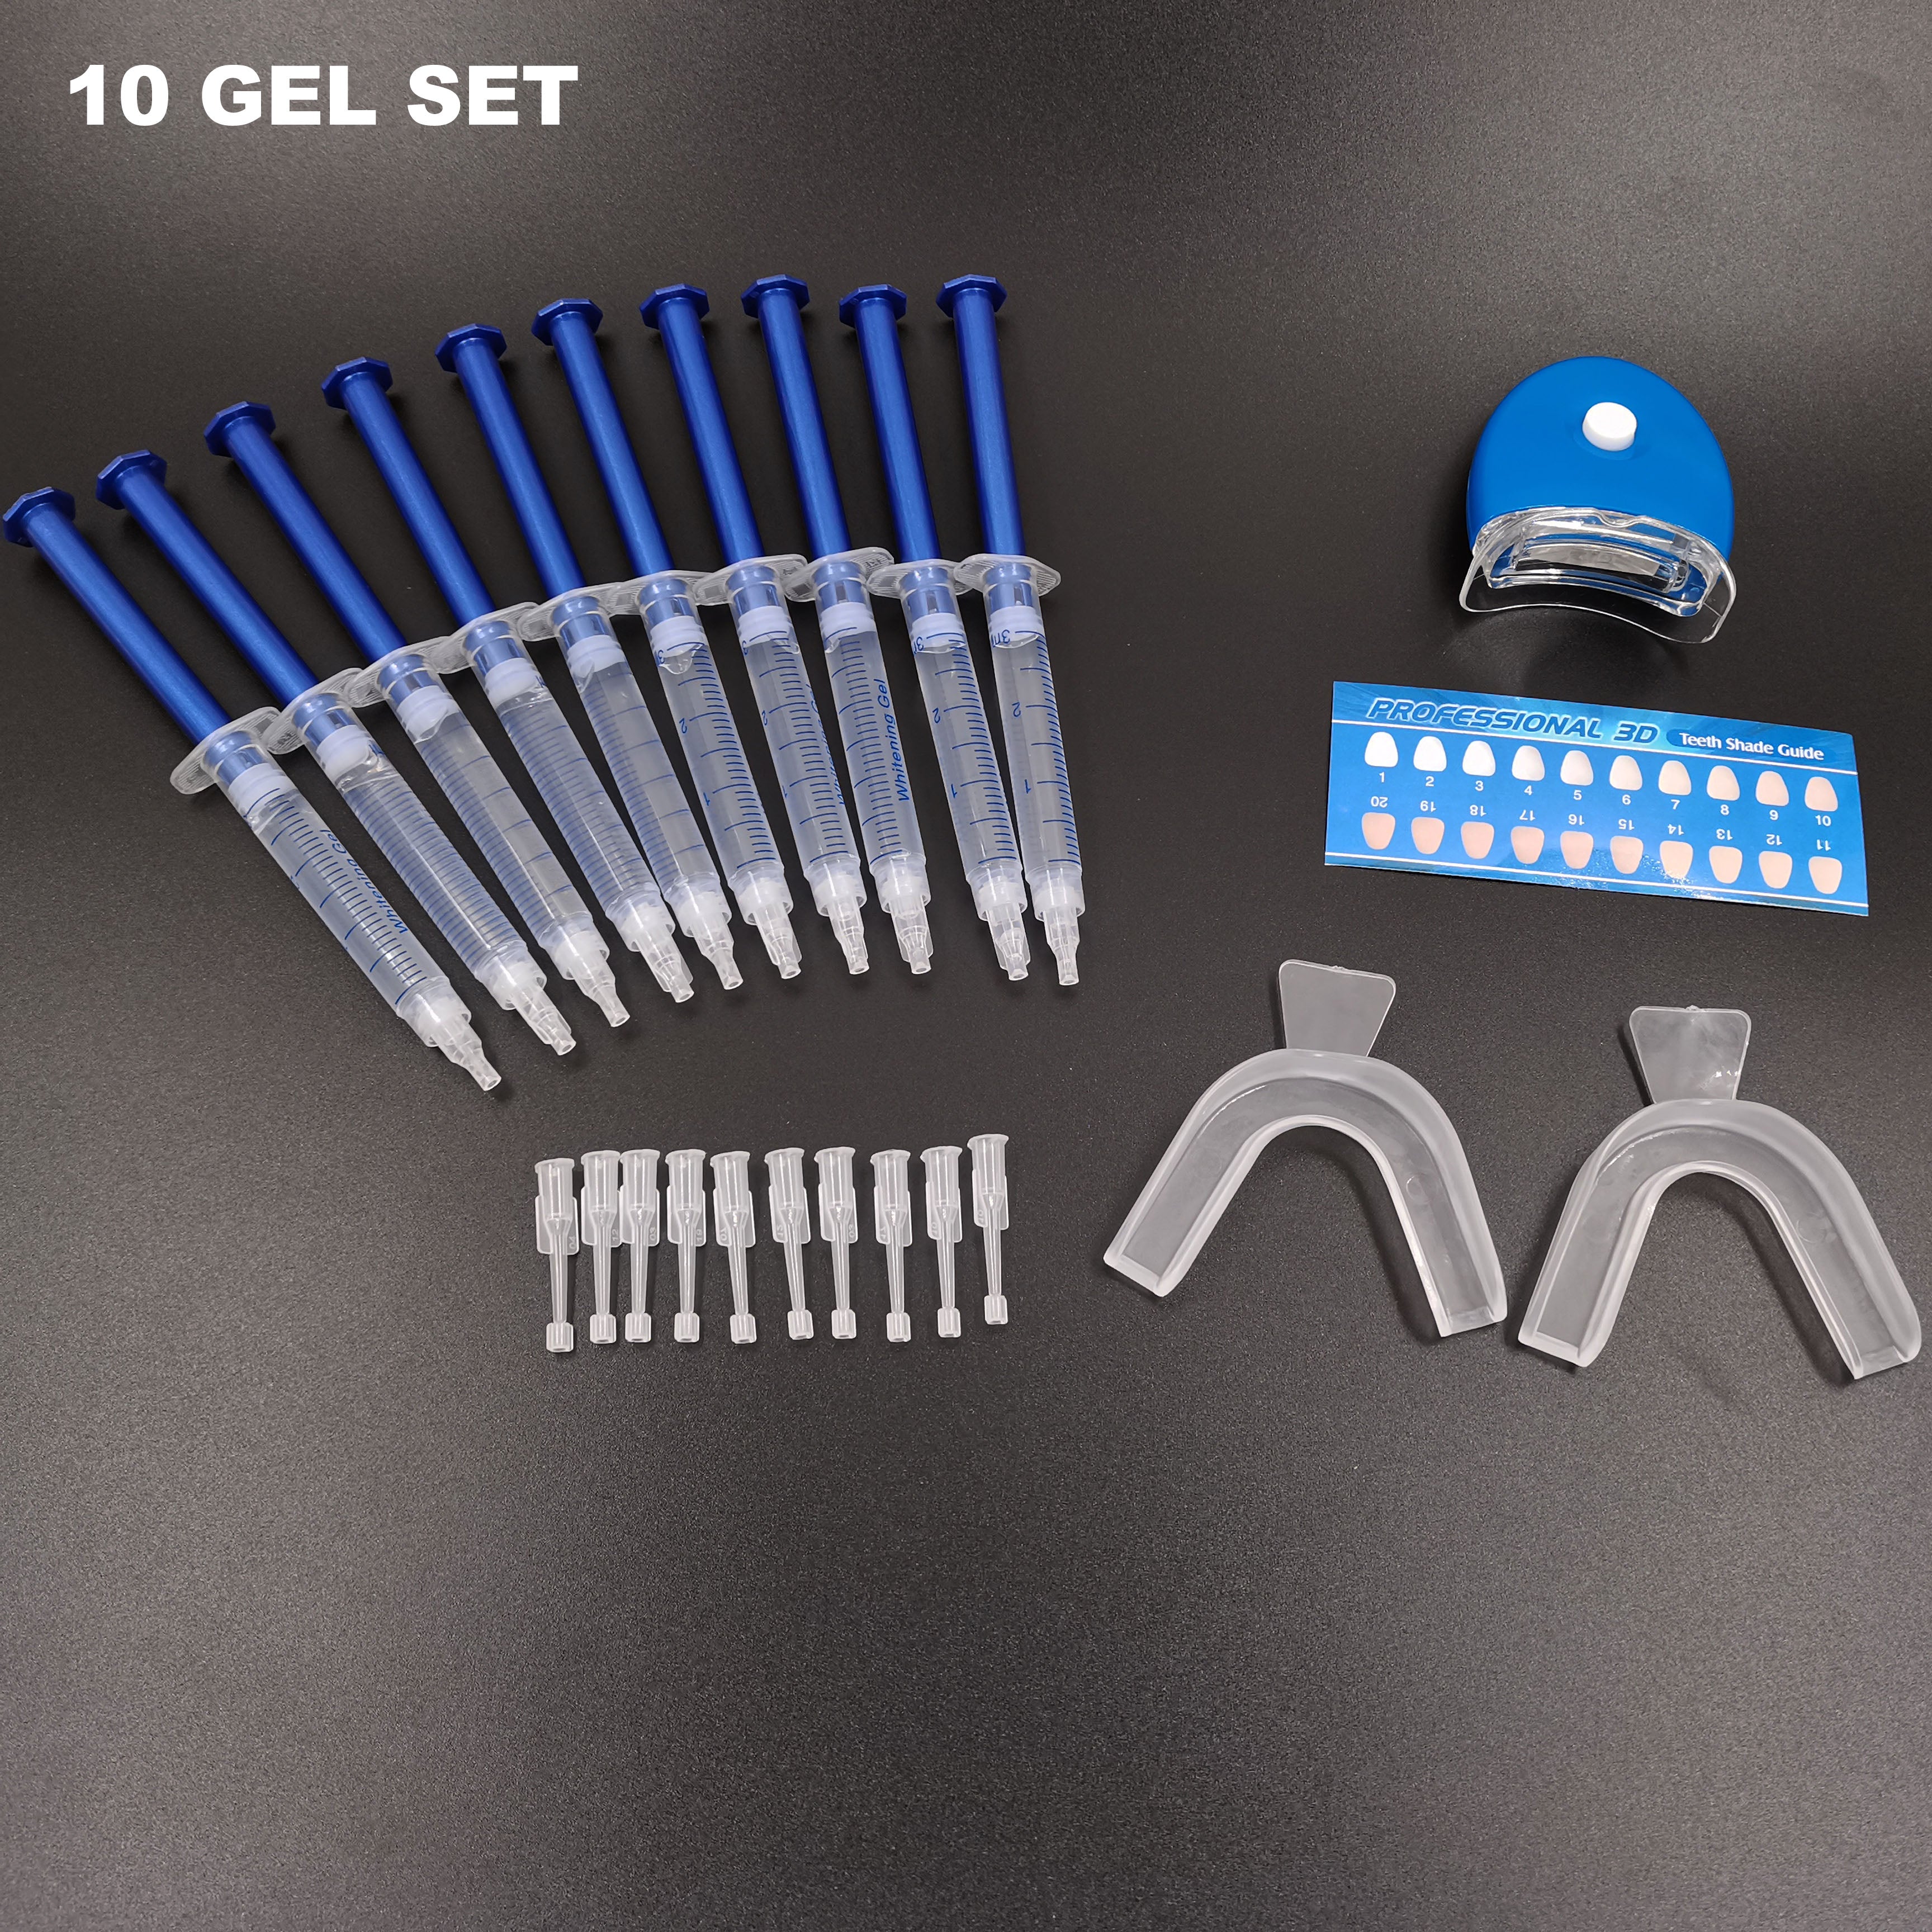 10 Gel Teeth Whitening Kit -  FREE Ultrasonic Electric Toothbrush USB Charged